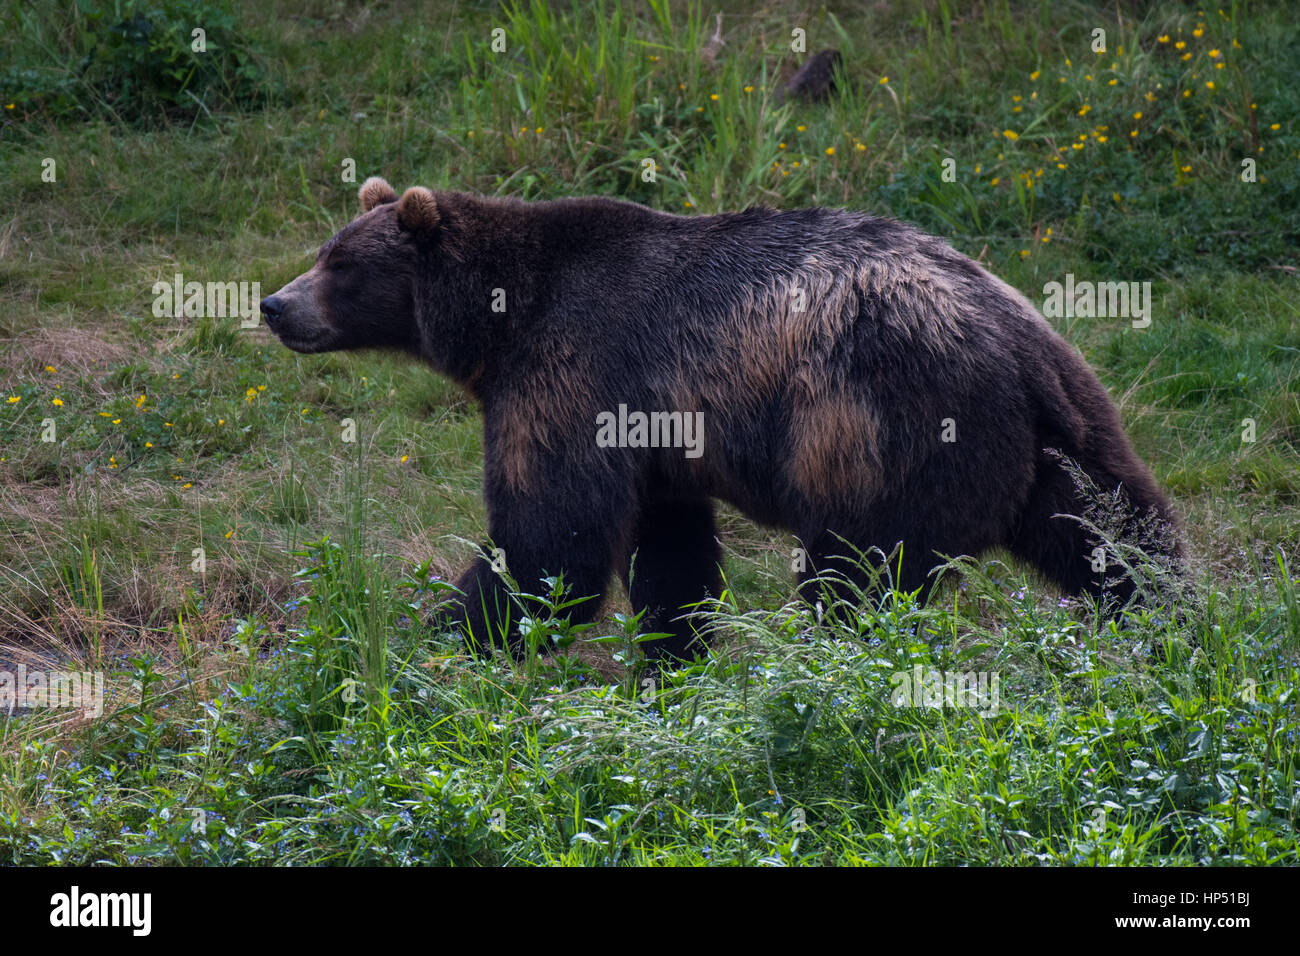 A Pretty Grizzly Bear Roaming the Alaskan Landscape Stock Photo